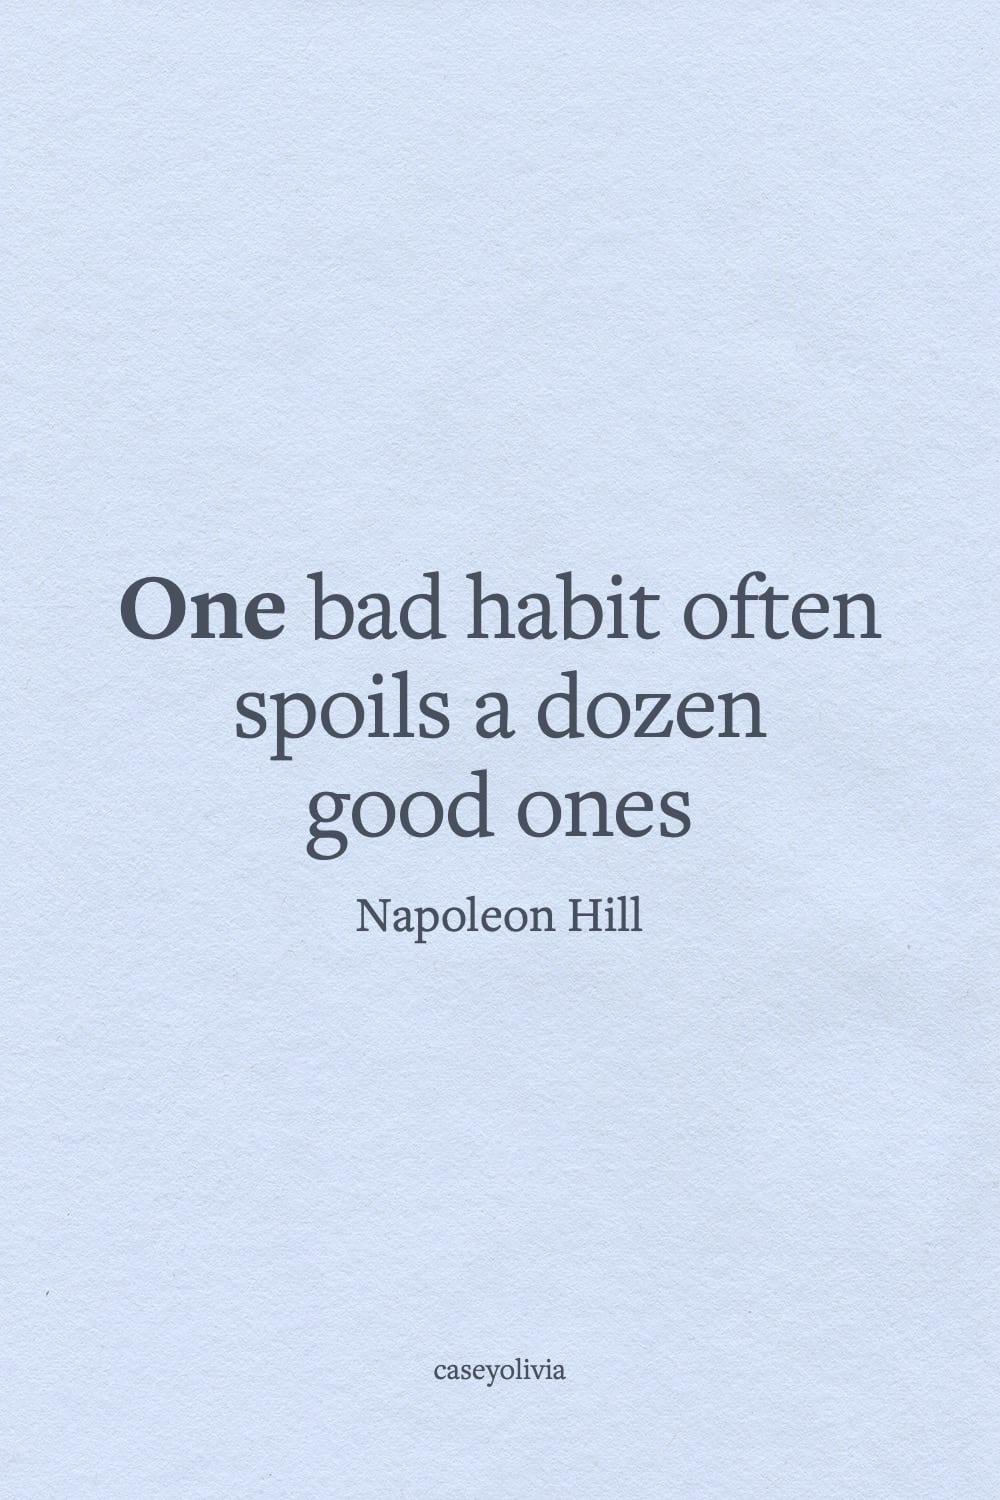 napoleon hill one bad habit quotation to change your mindset